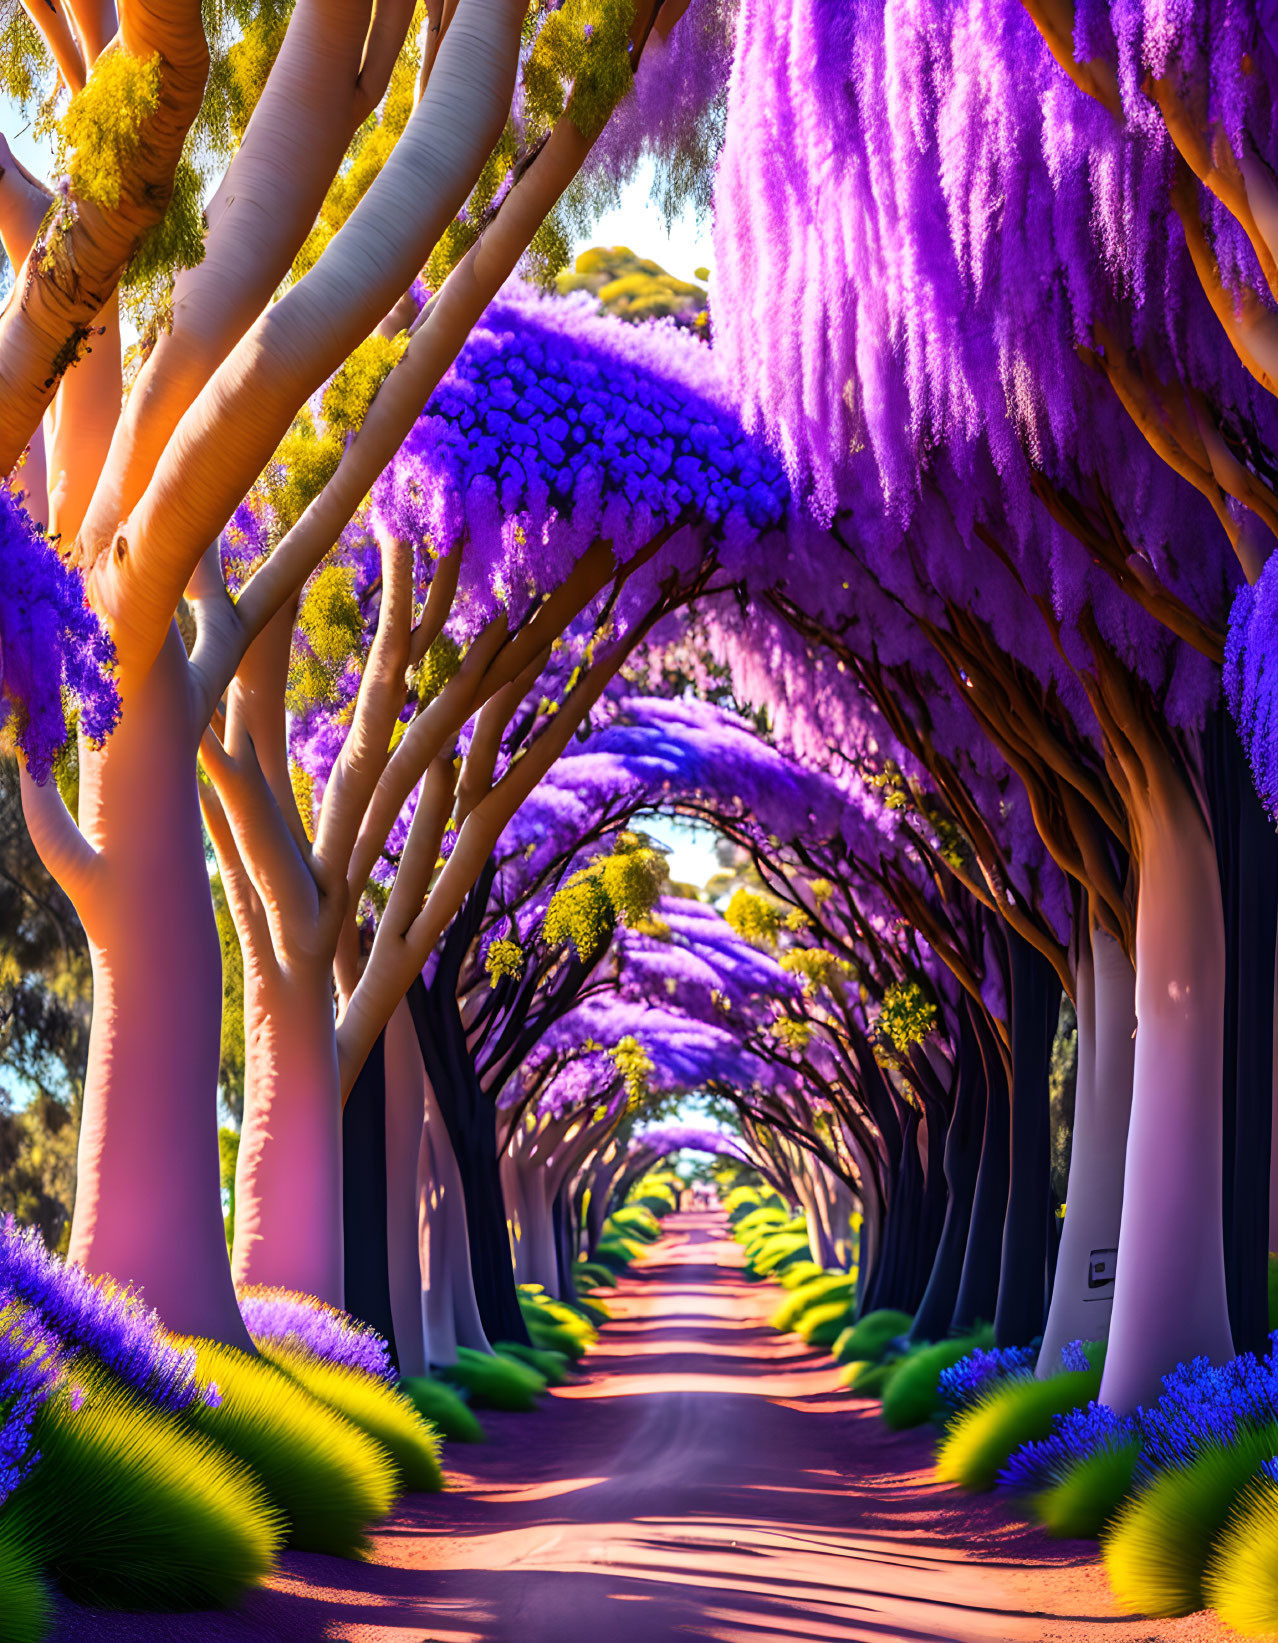 Purple Jacaranda Trees Create Natural Archway Under Sunny Sky